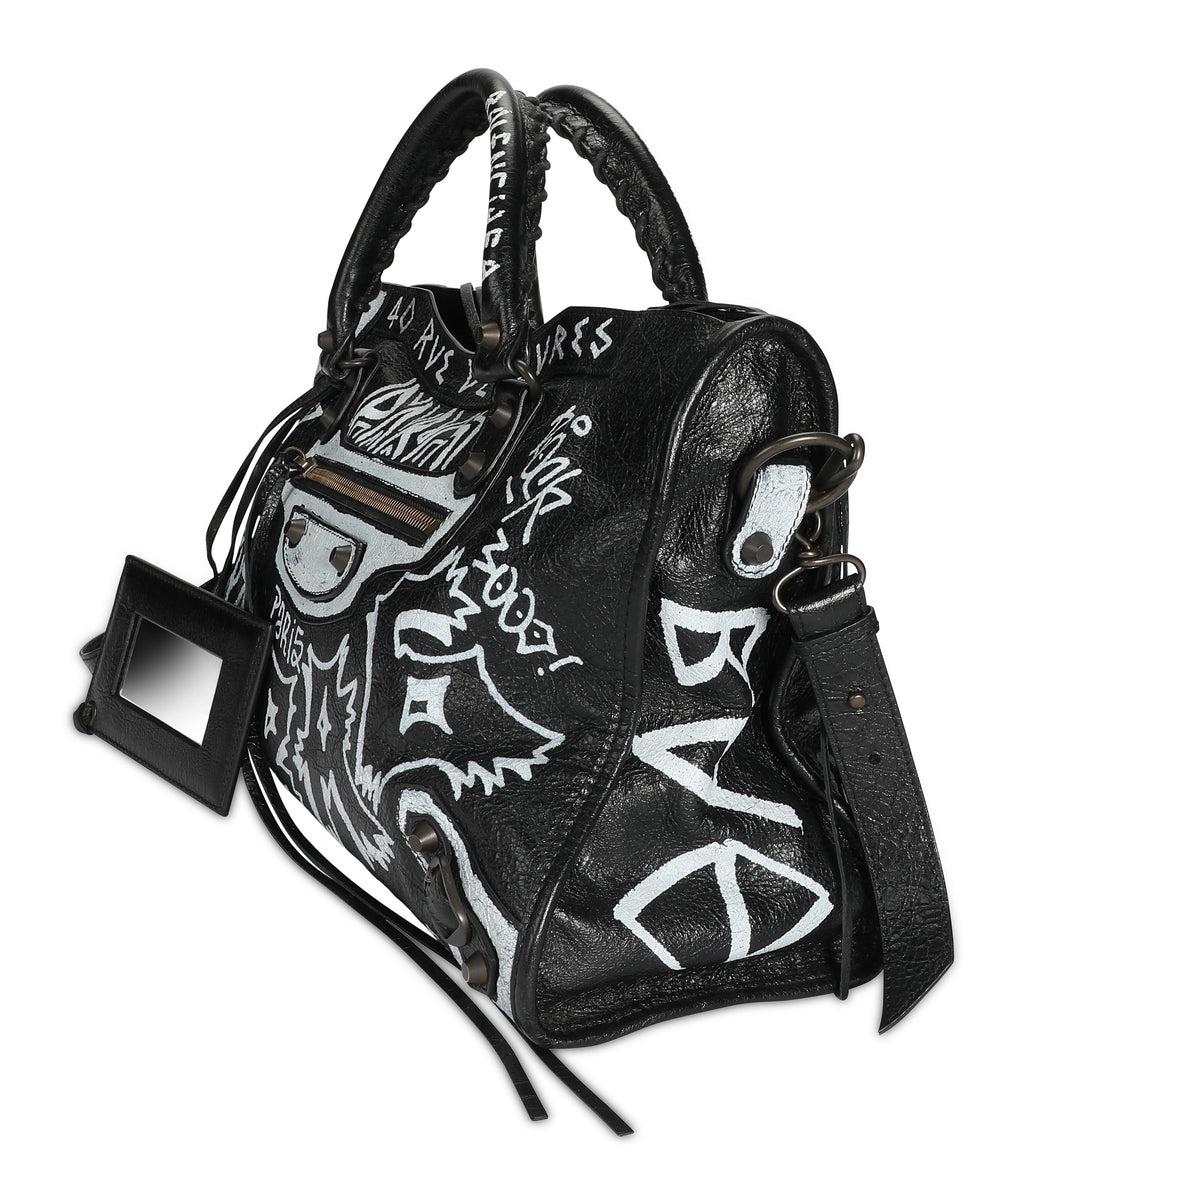 Balenciaga Graffiti Classic City Mini Leather Bag in Black